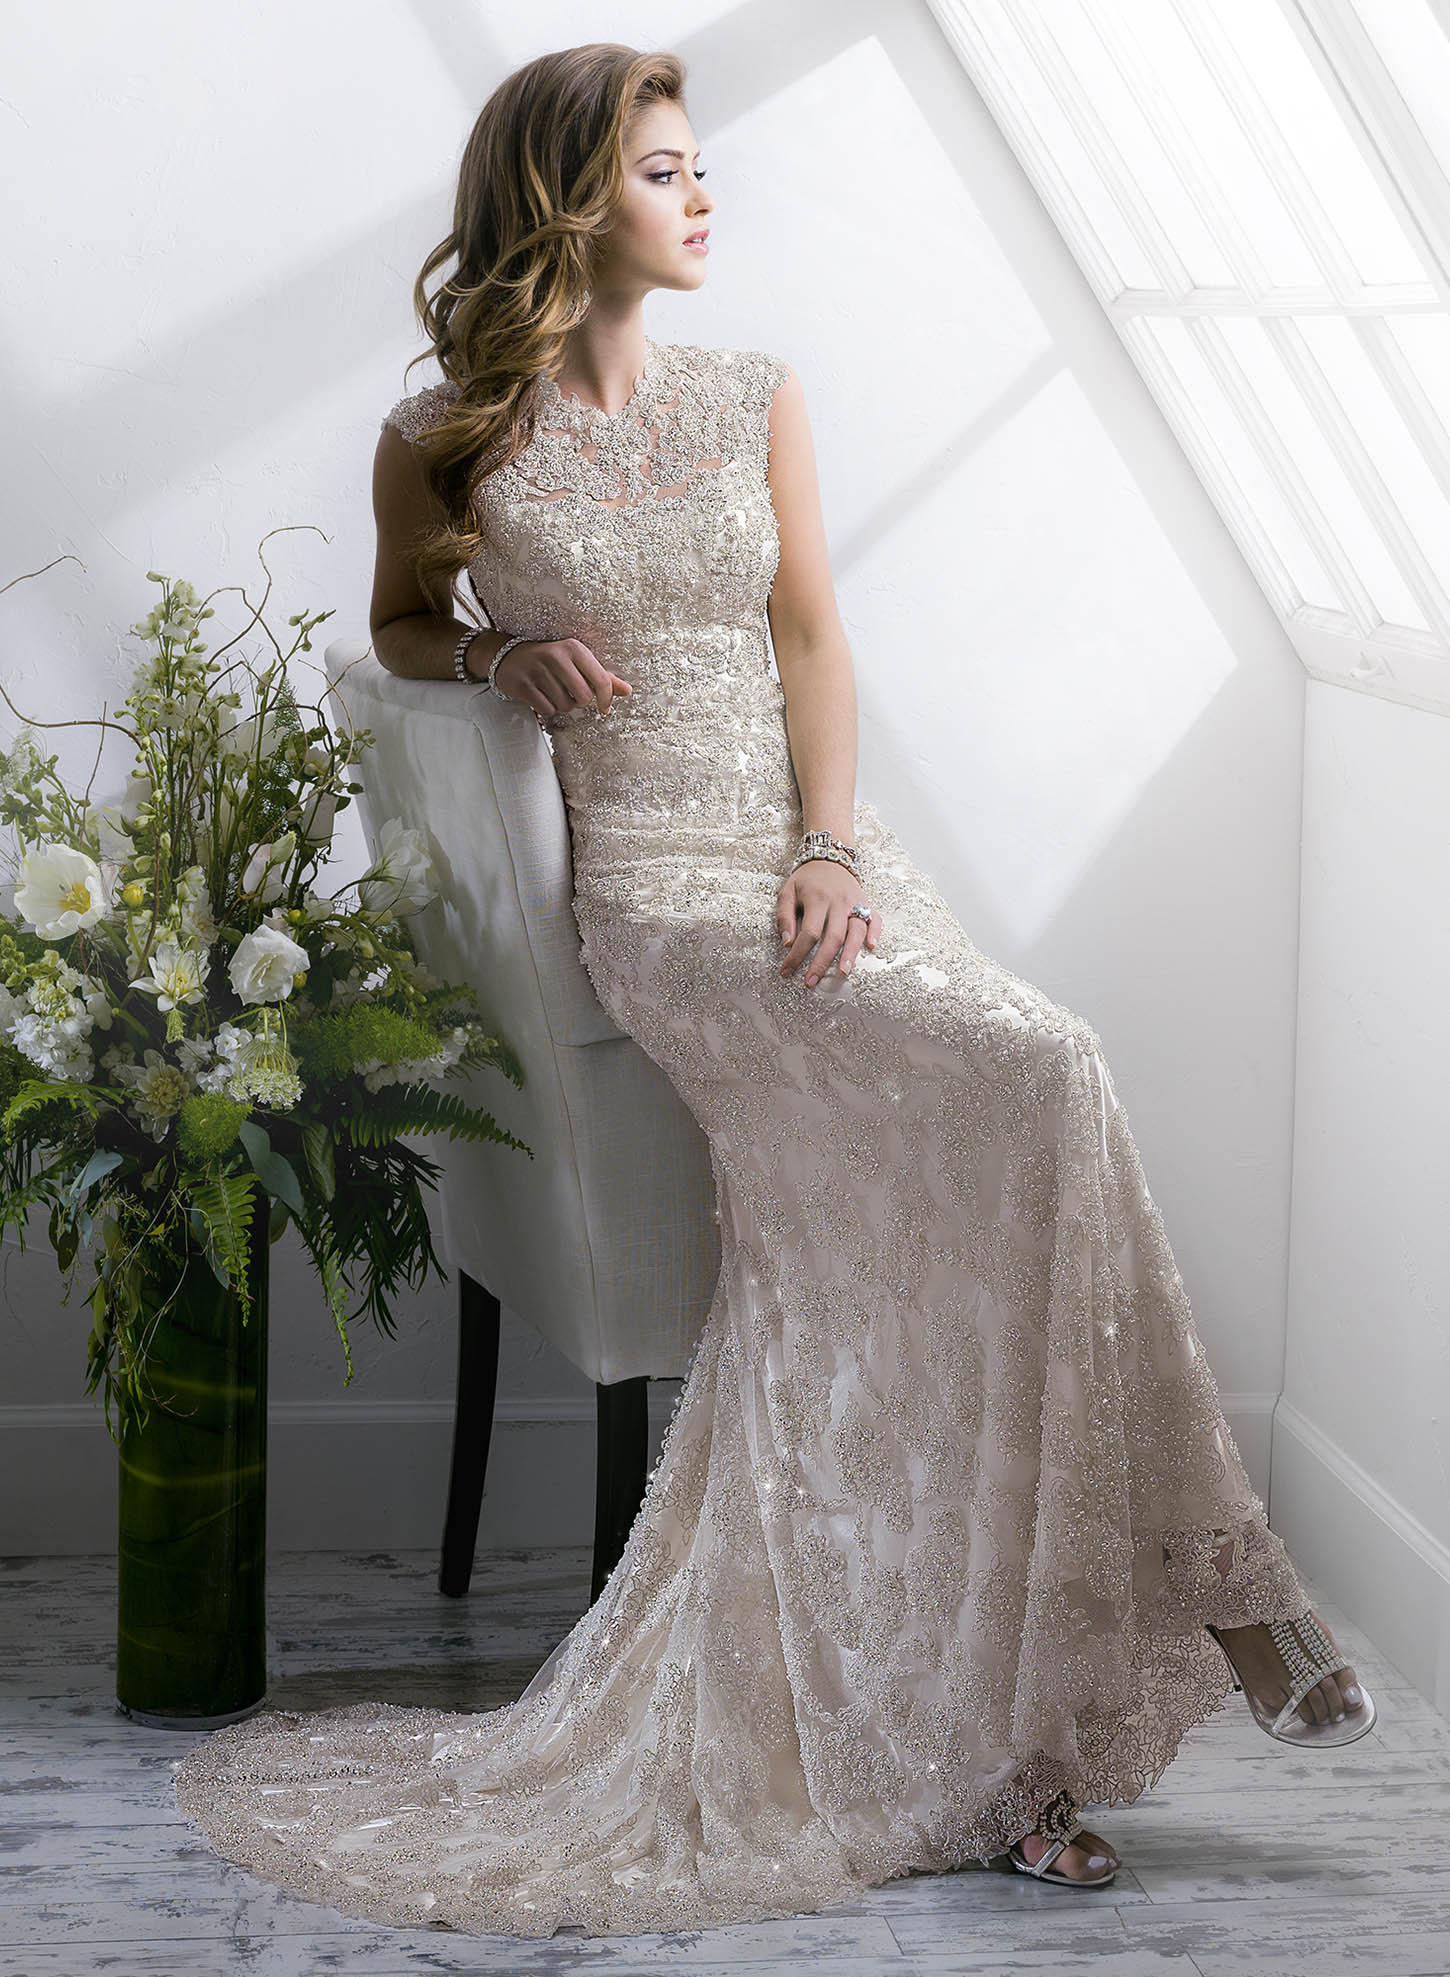 10 Breathtaking Designer Wedding Dresses 2014 BestBride101